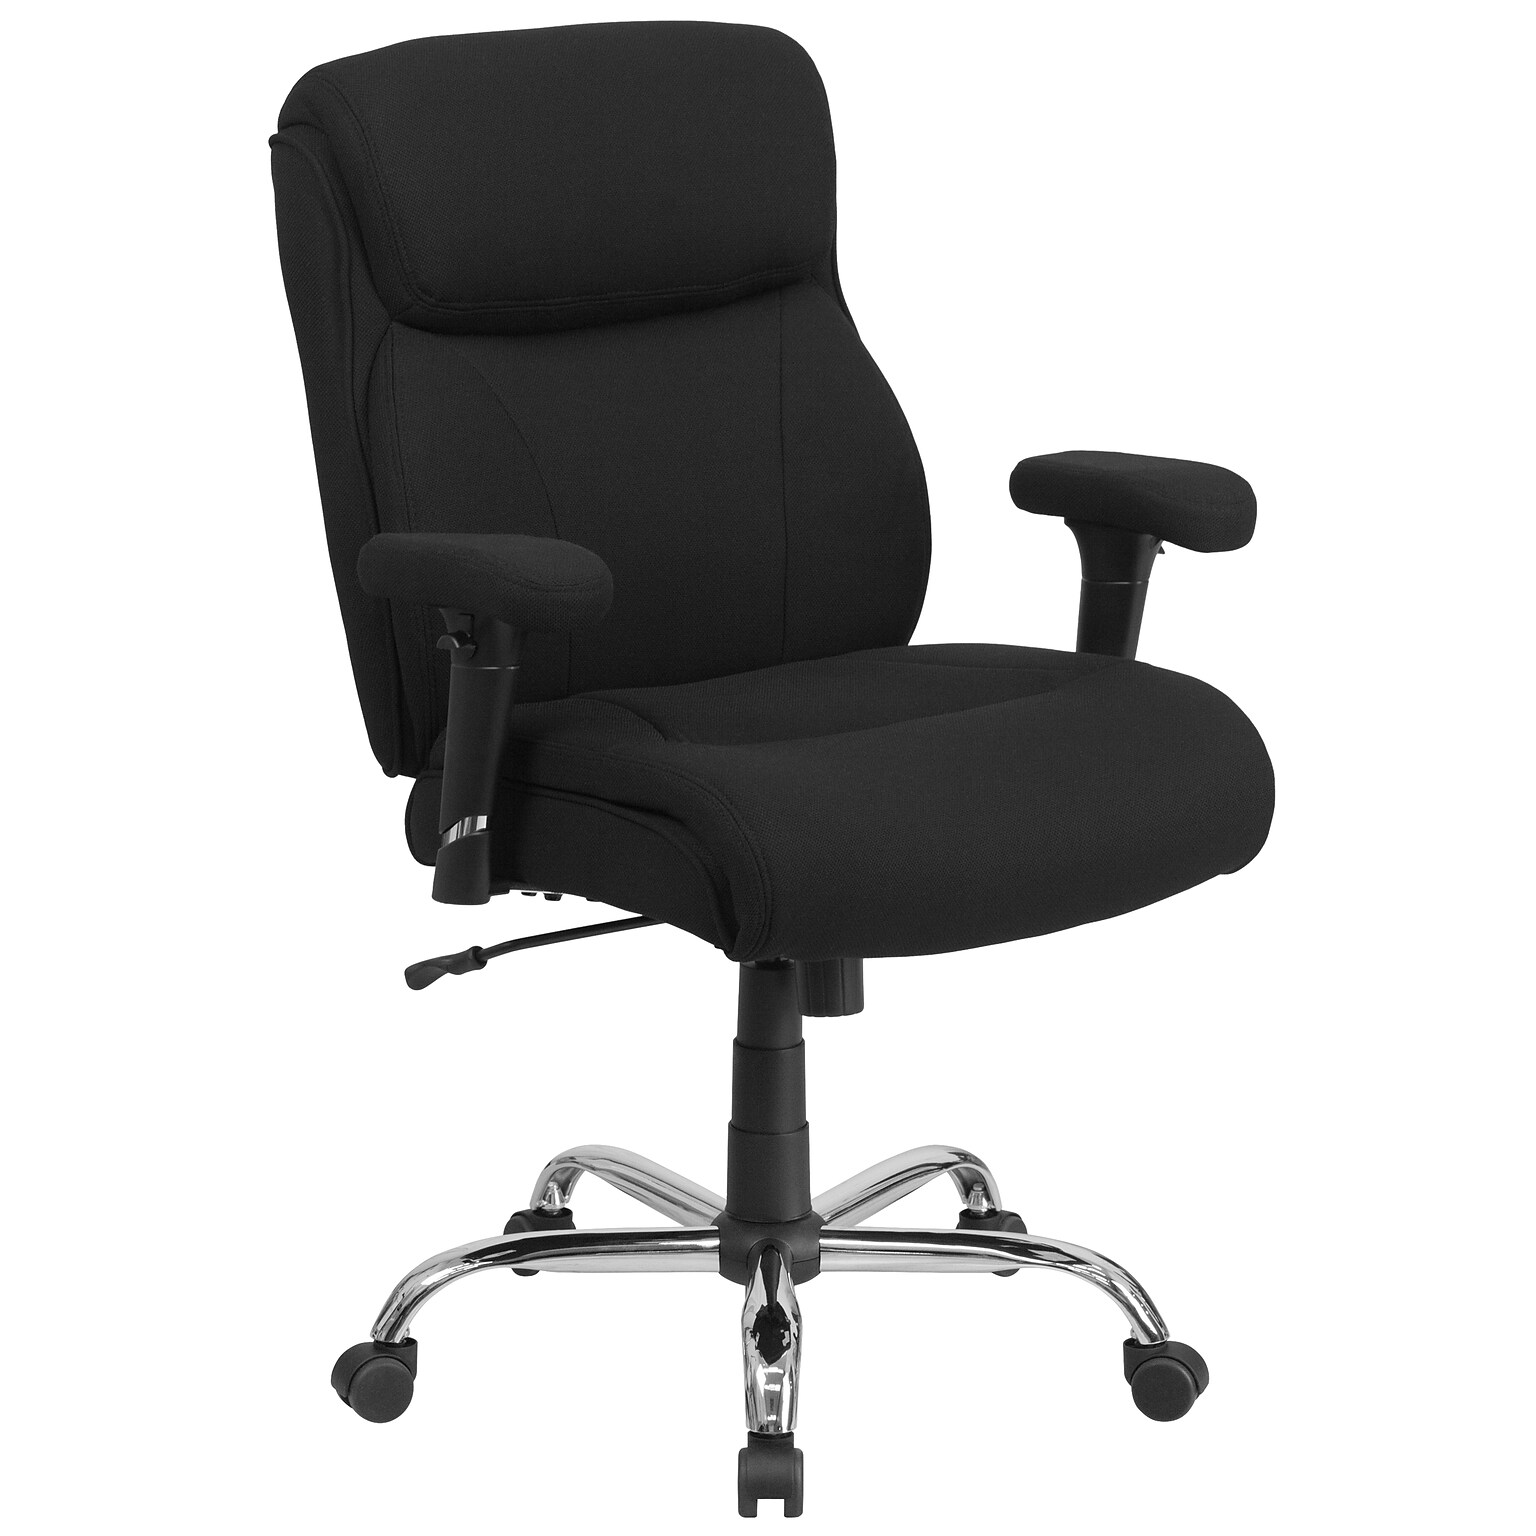 Flash Furniture HERCULES Series Ergonomic Fabric Swivel Big & Tall Task Office Chair, Black (GO2031F)